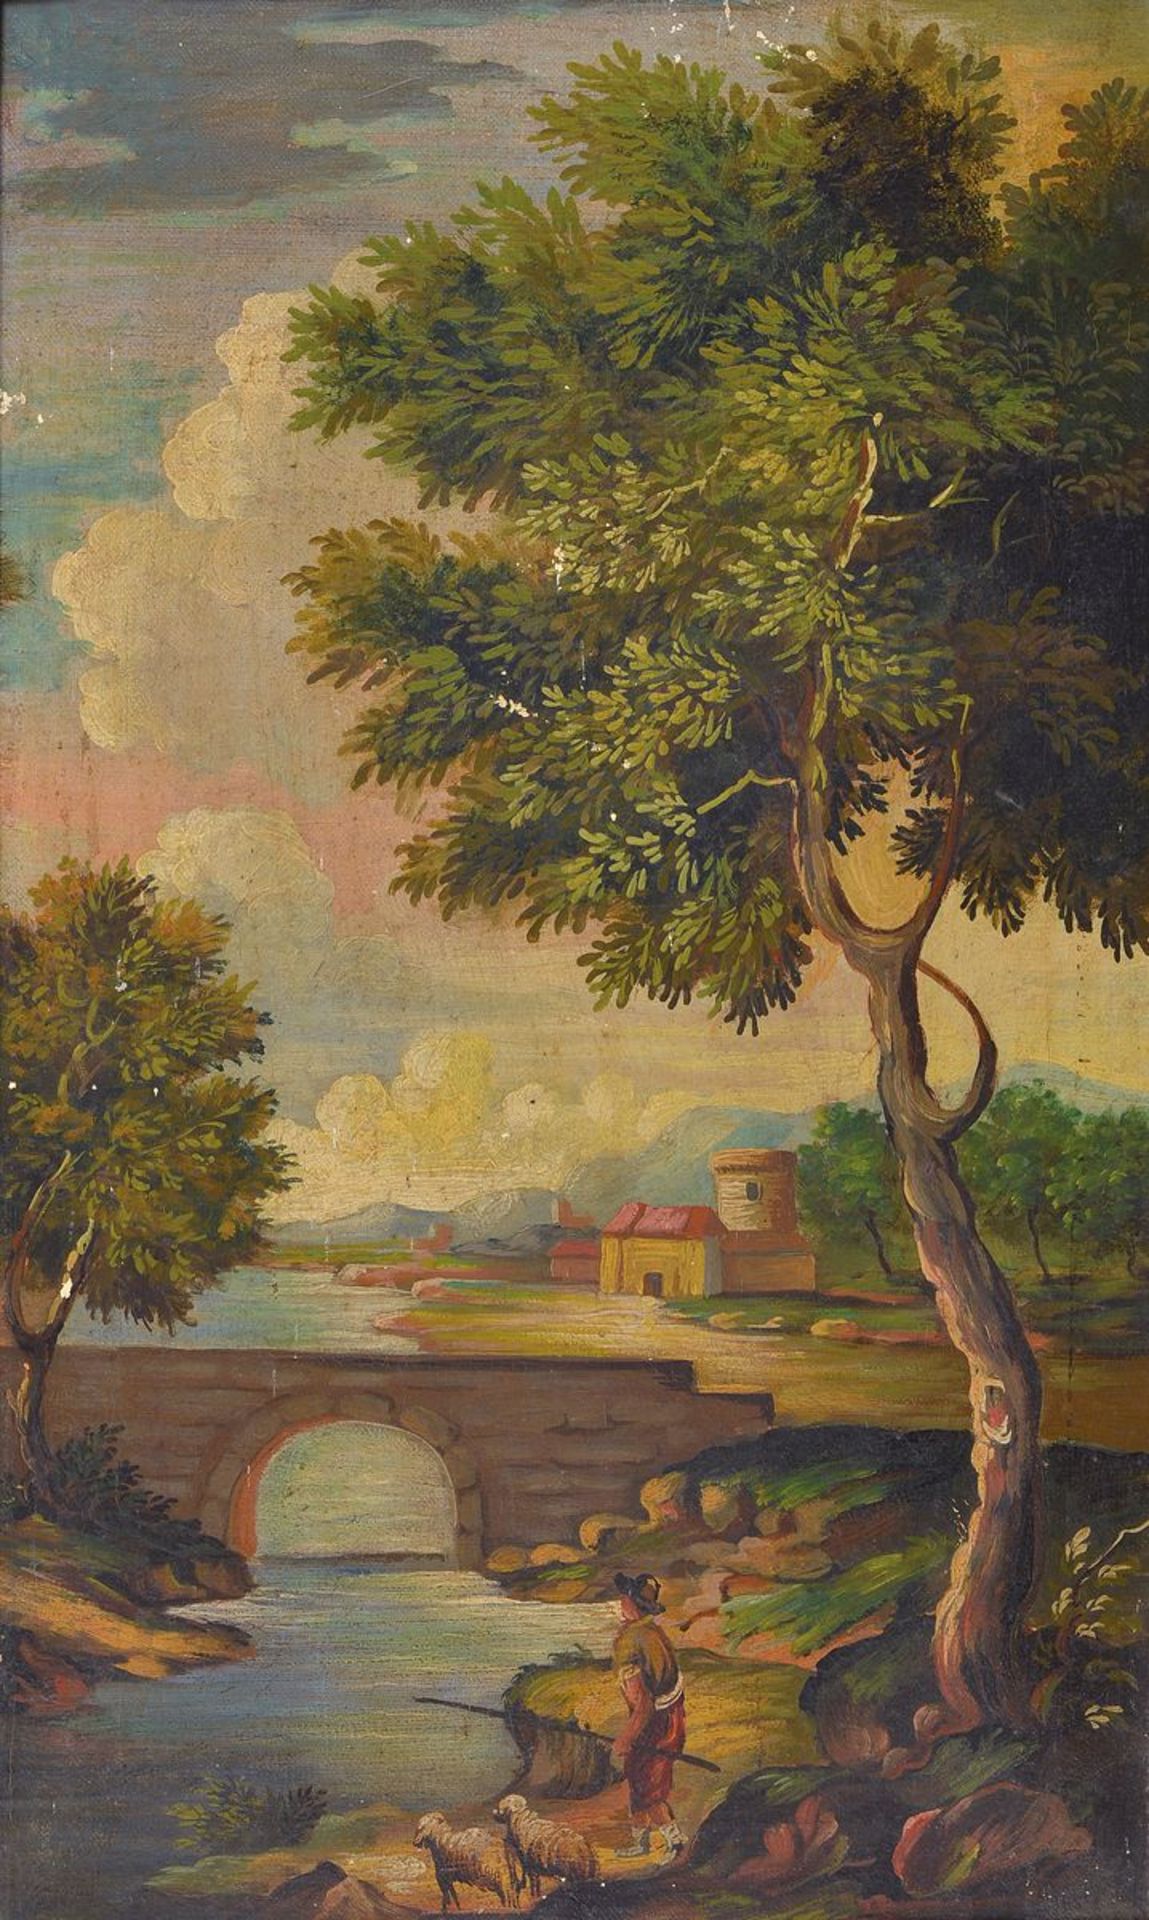 Unidentified artist, around 1900, after a model around 1780, Ideal Italian landscape, oil /